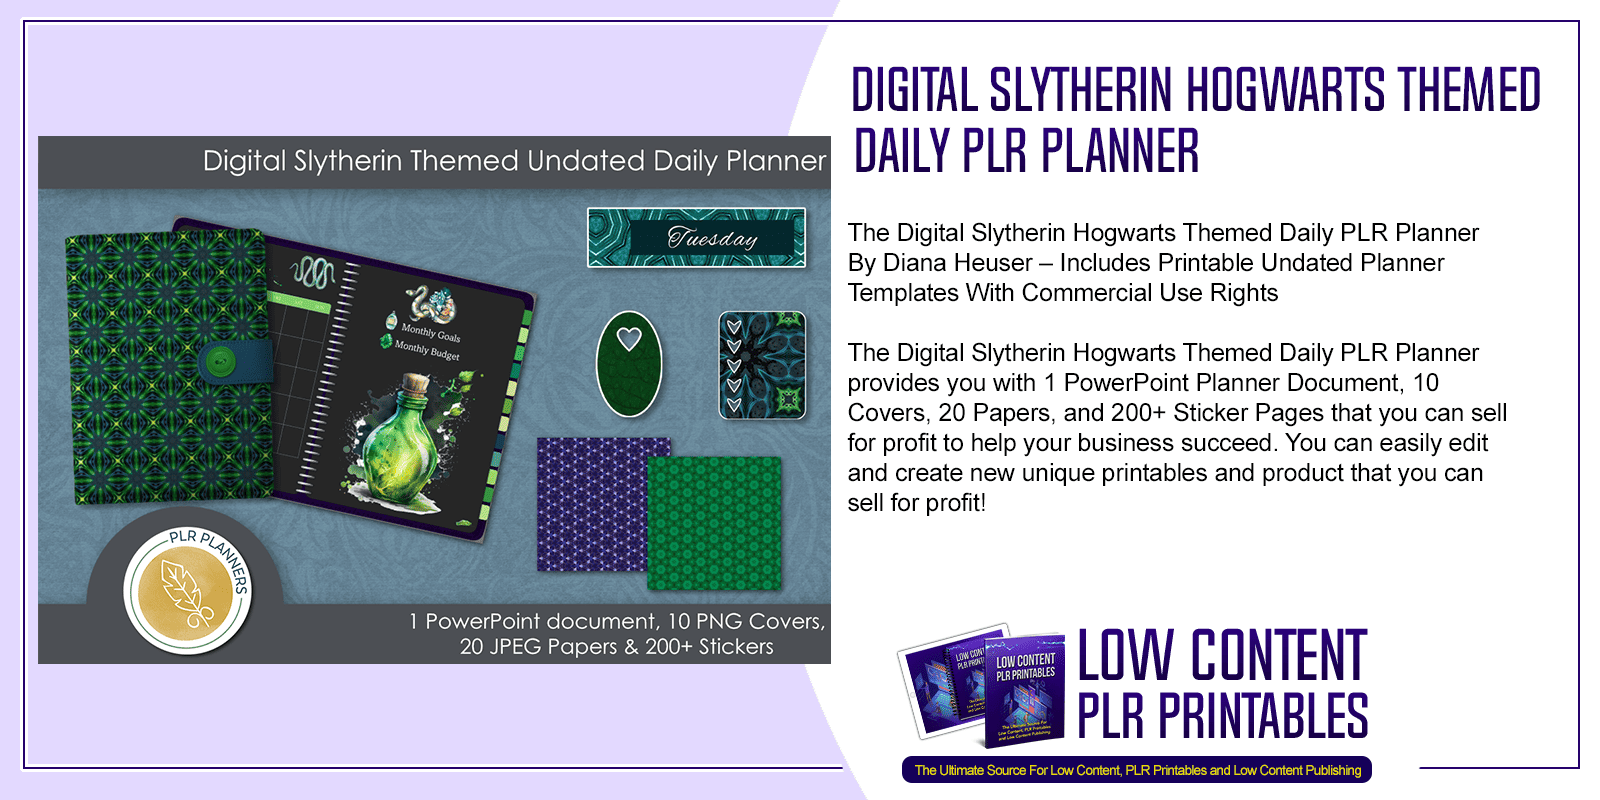 Digital Slytherin Hogwarts Themed Daily PLR Planner